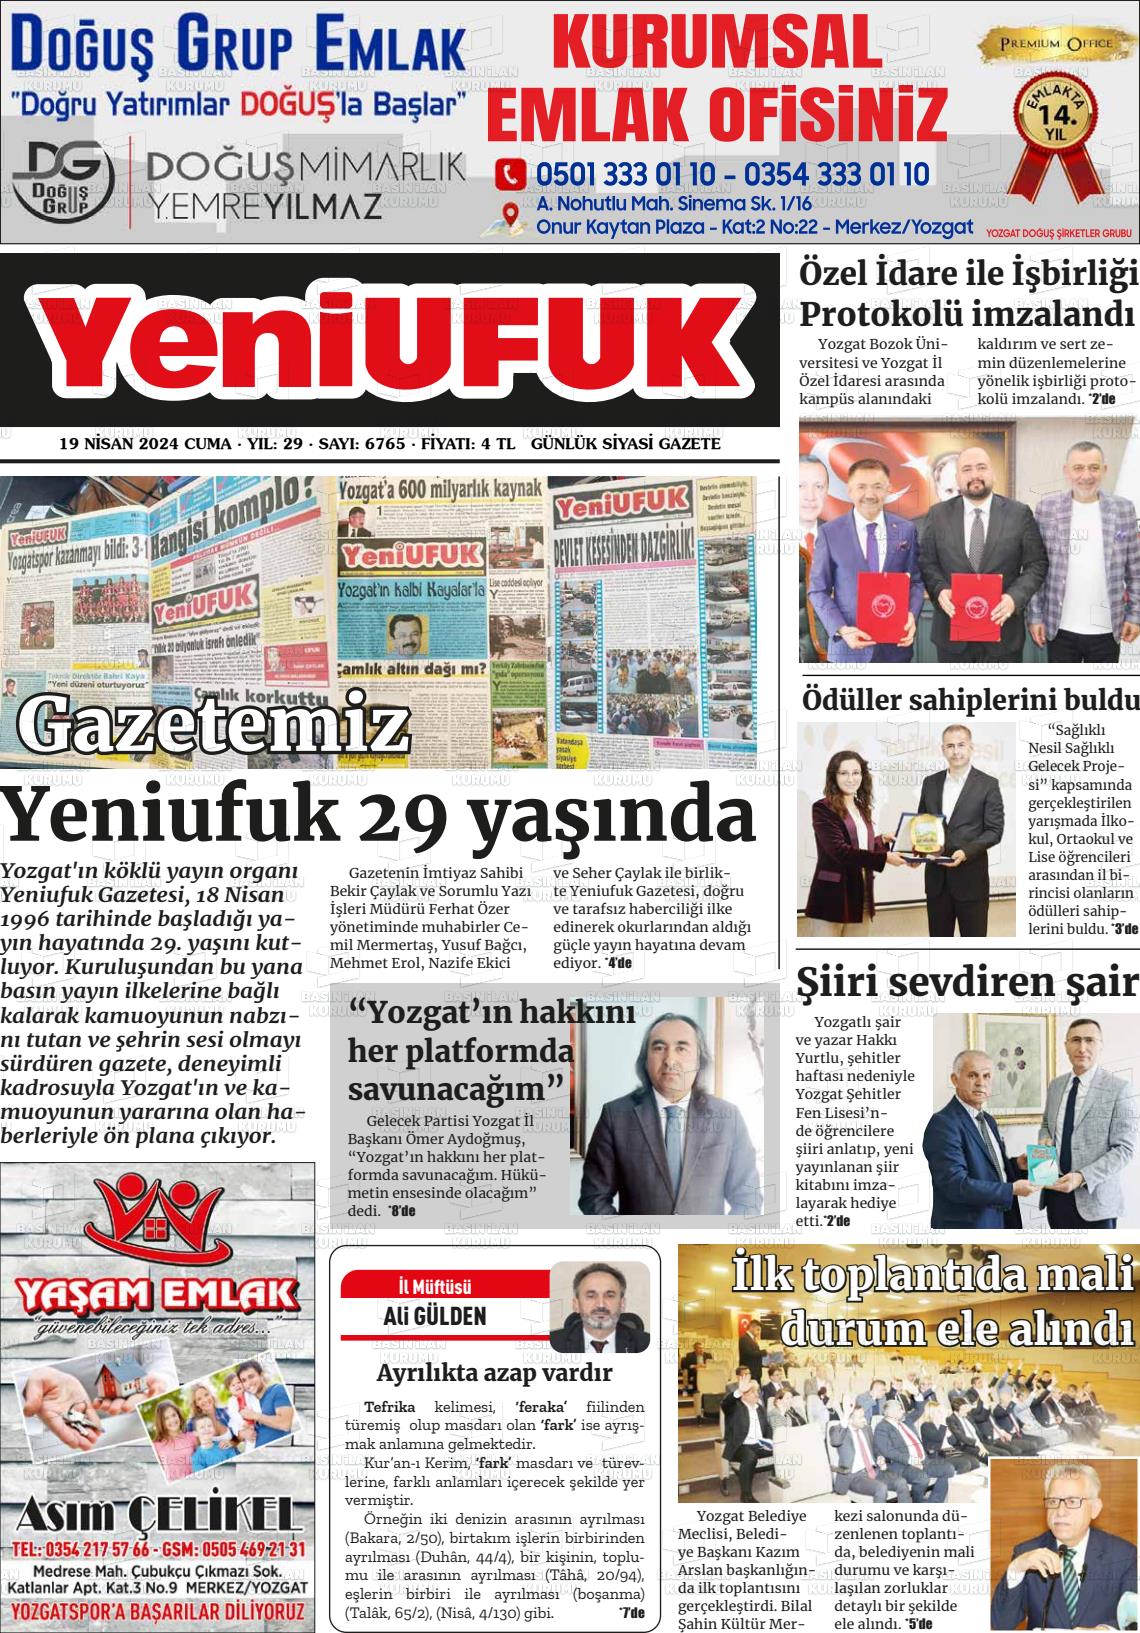 19 Nisan 2024 Yozgat Yeni Ufuk Gazete Manşeti